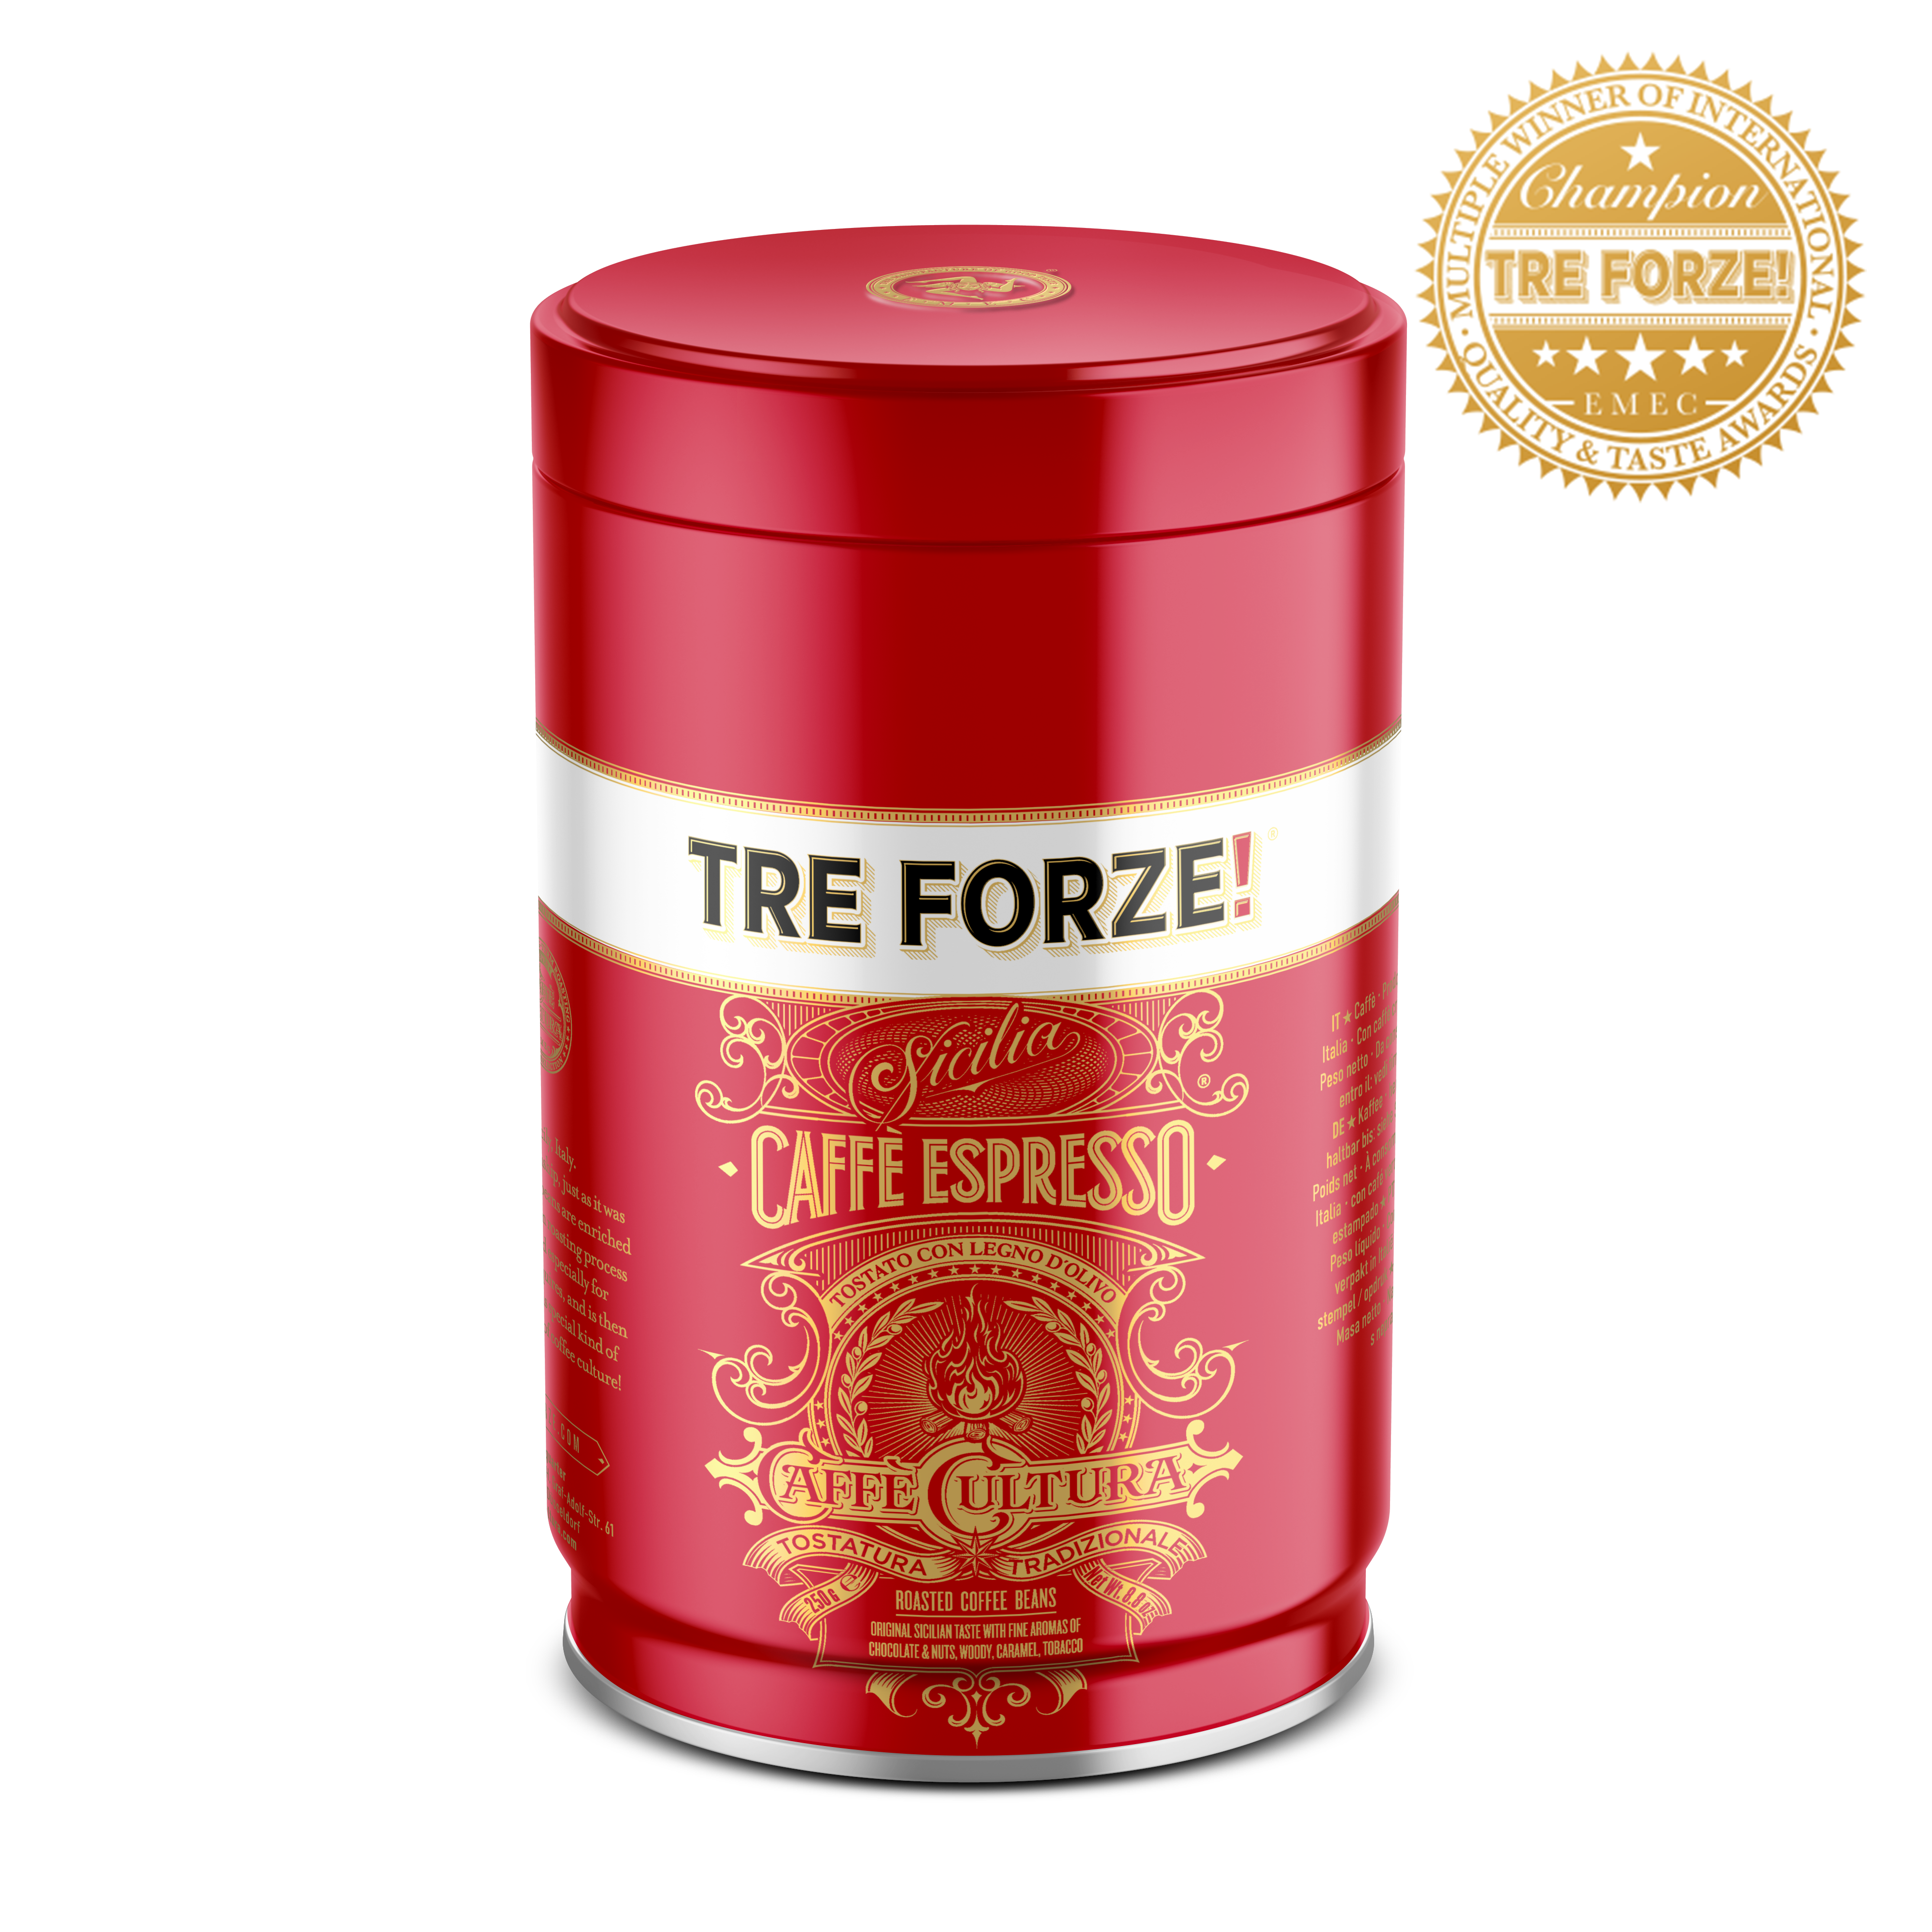 TRE FORZE! - Caffè Espresso - 250g - Beans - Bottle